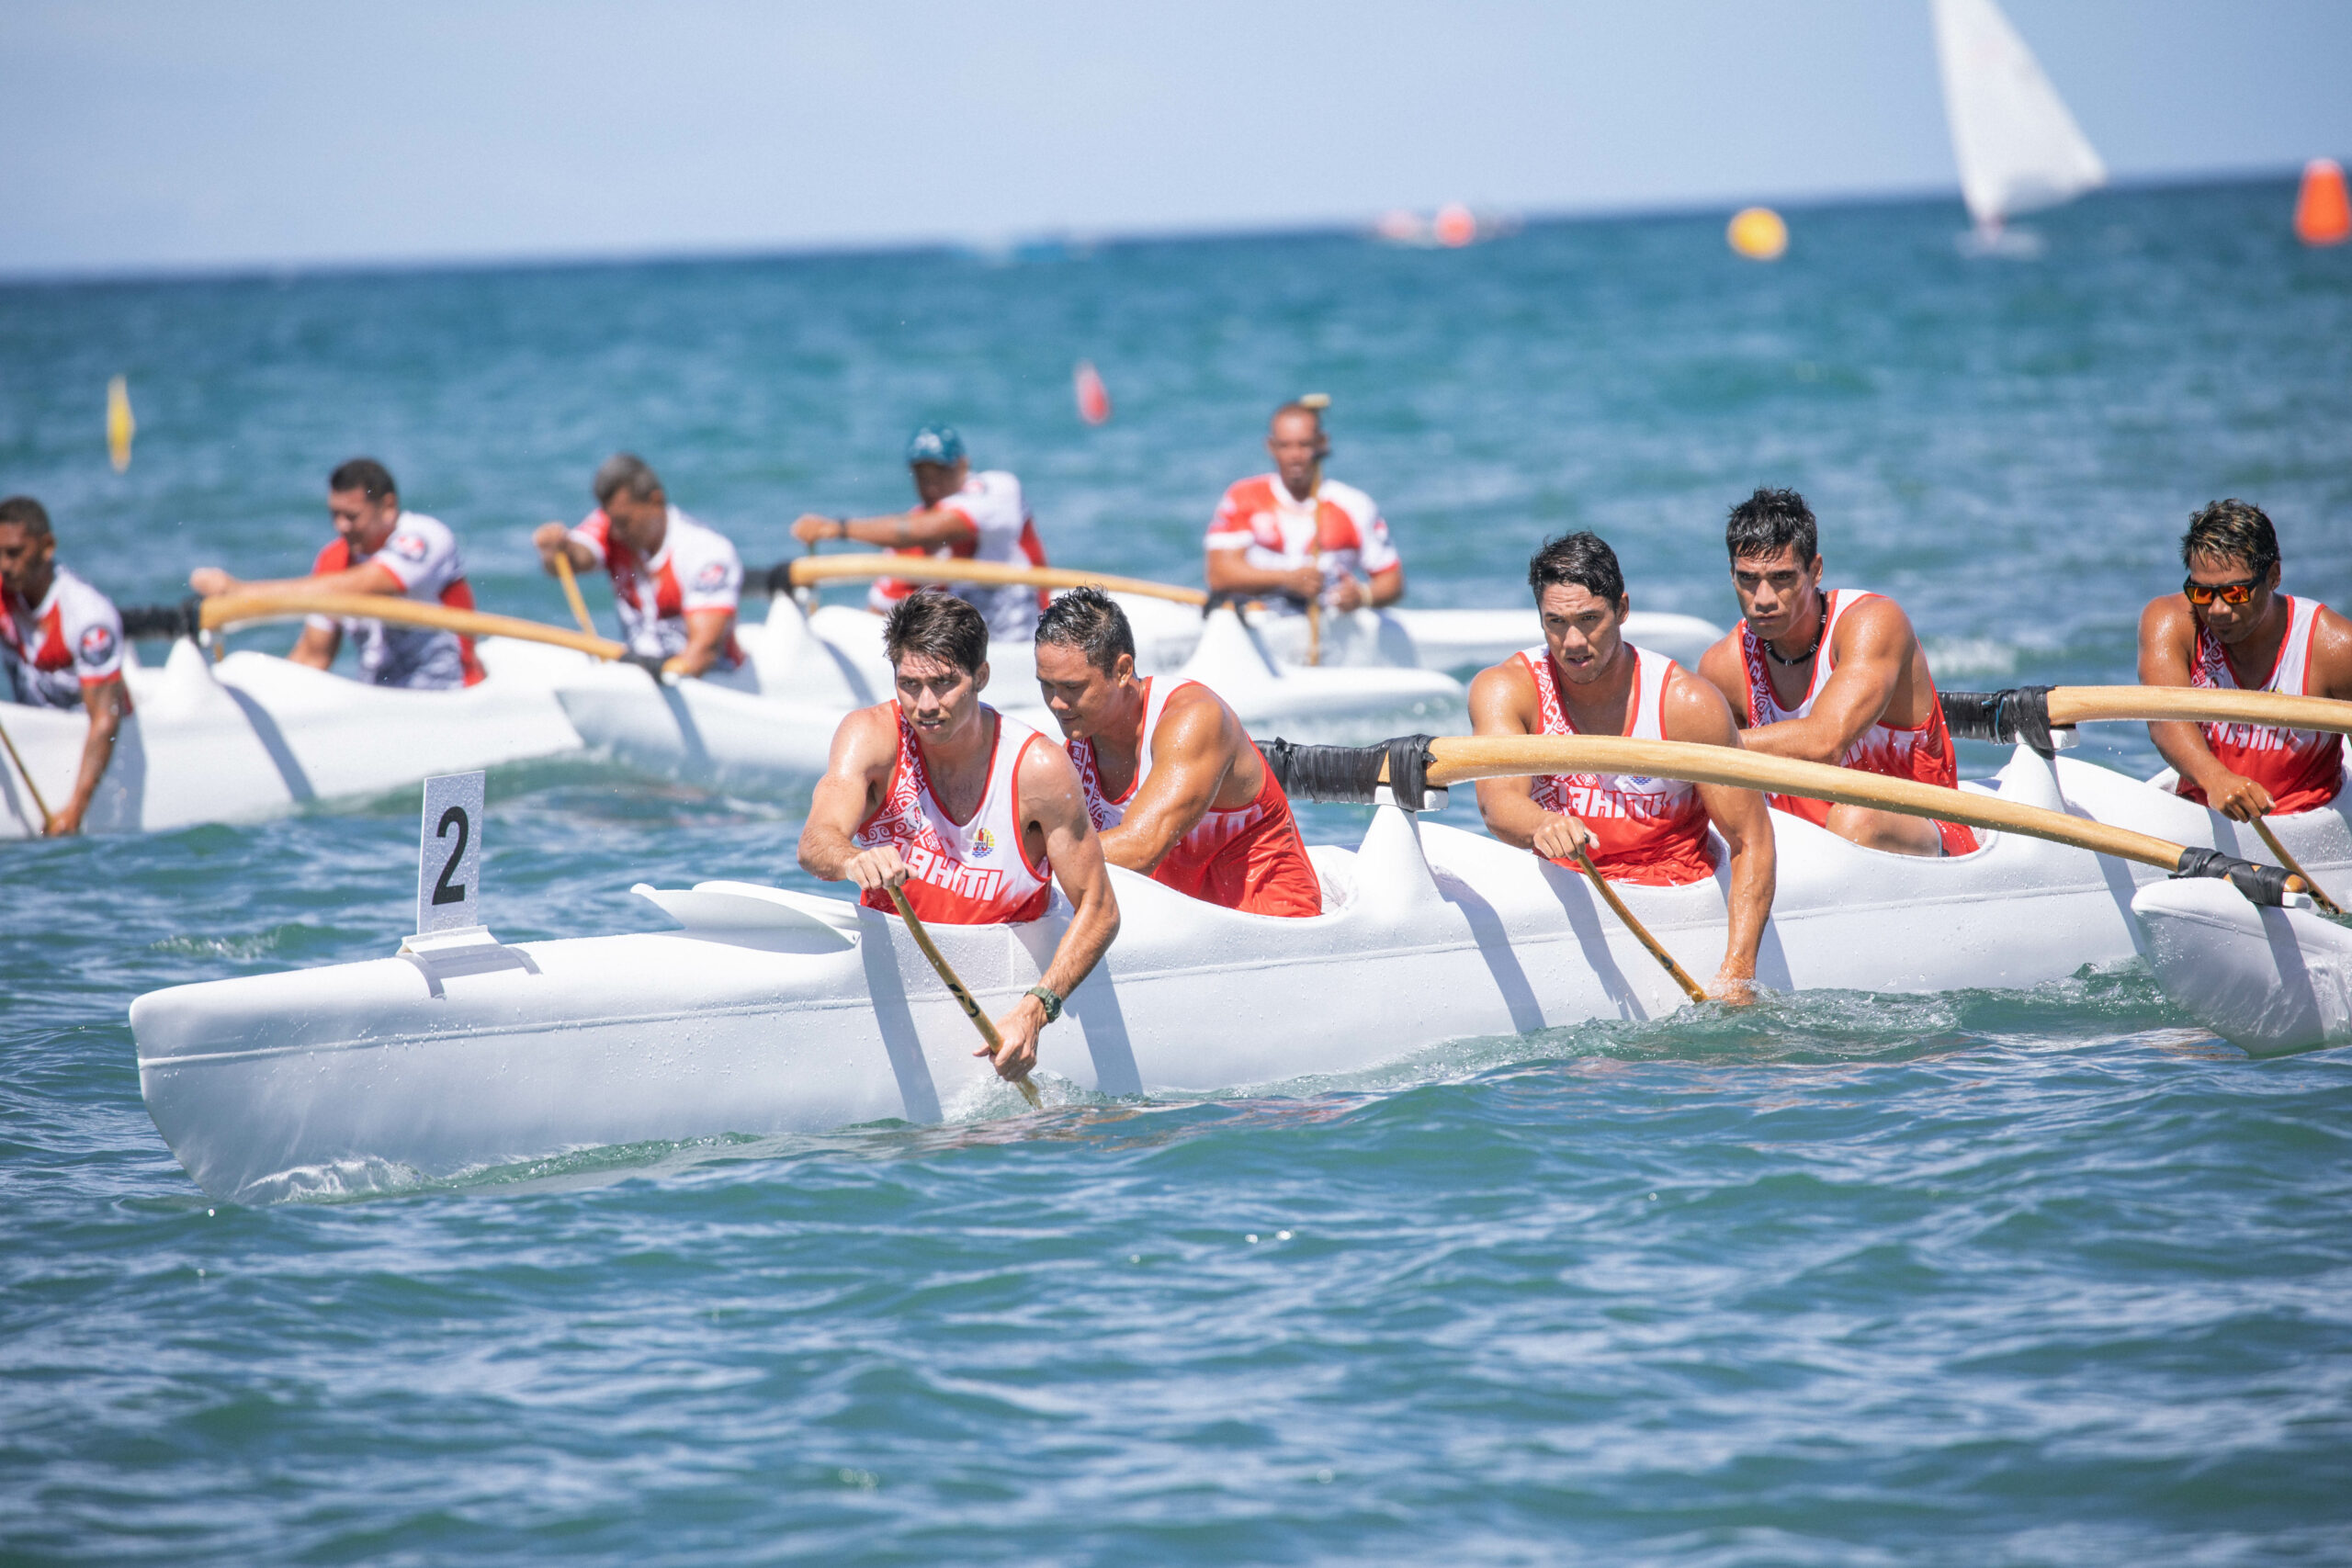 Men paddling in a va'a race